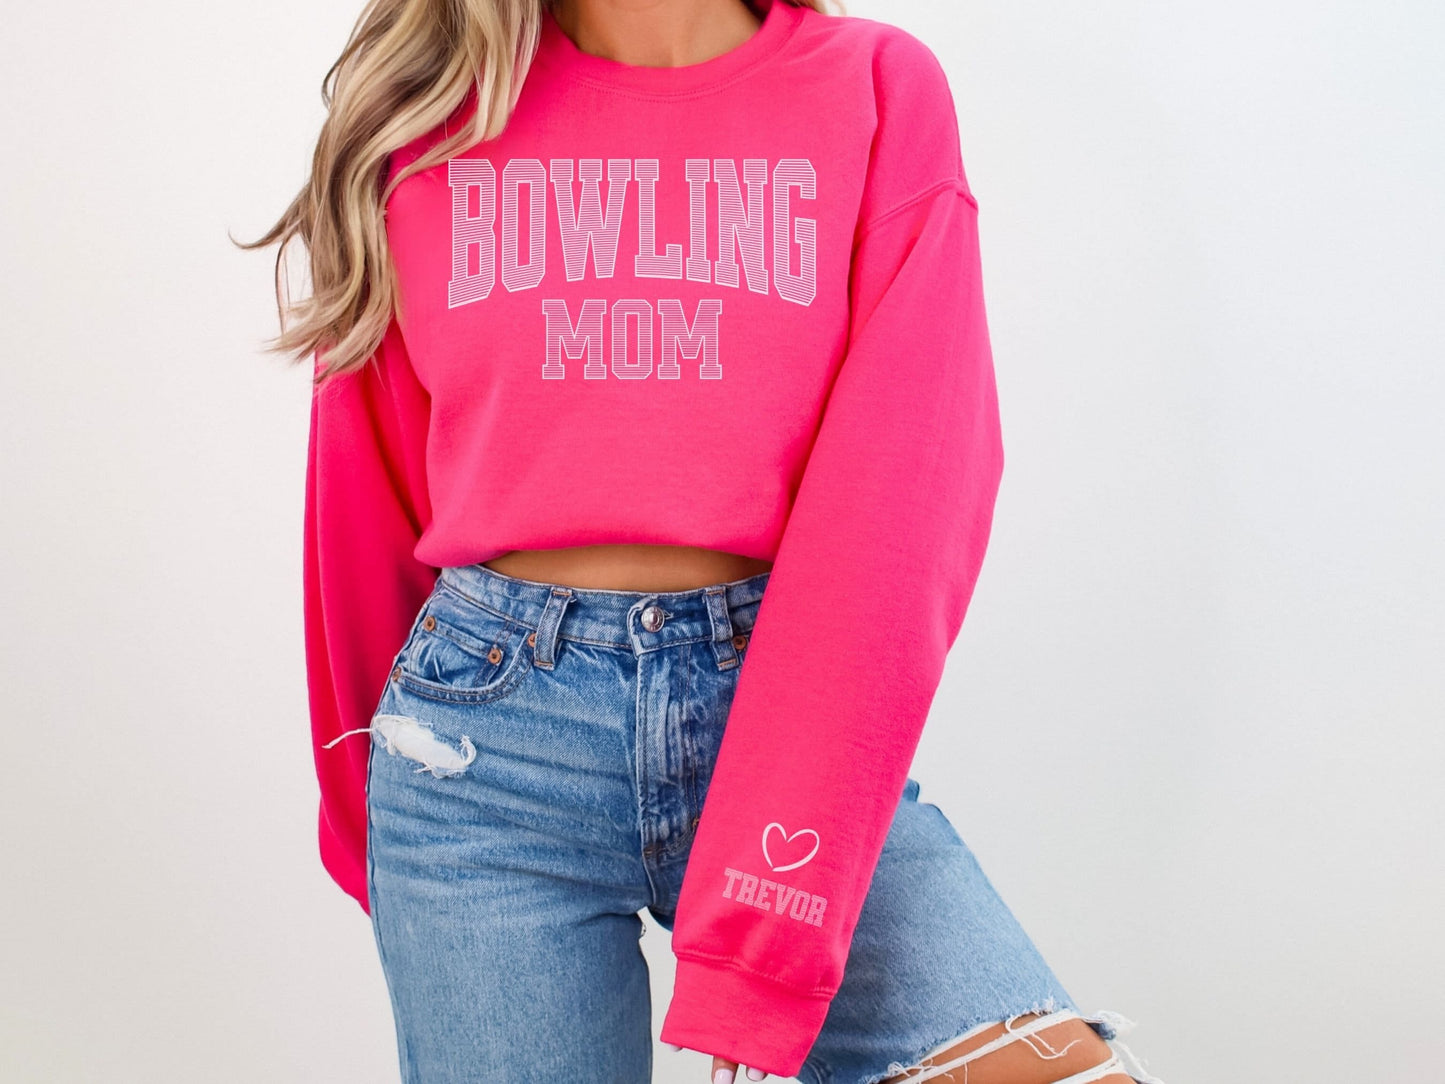 Bowling Mom Sweatshirt with Custom Sleeve Design